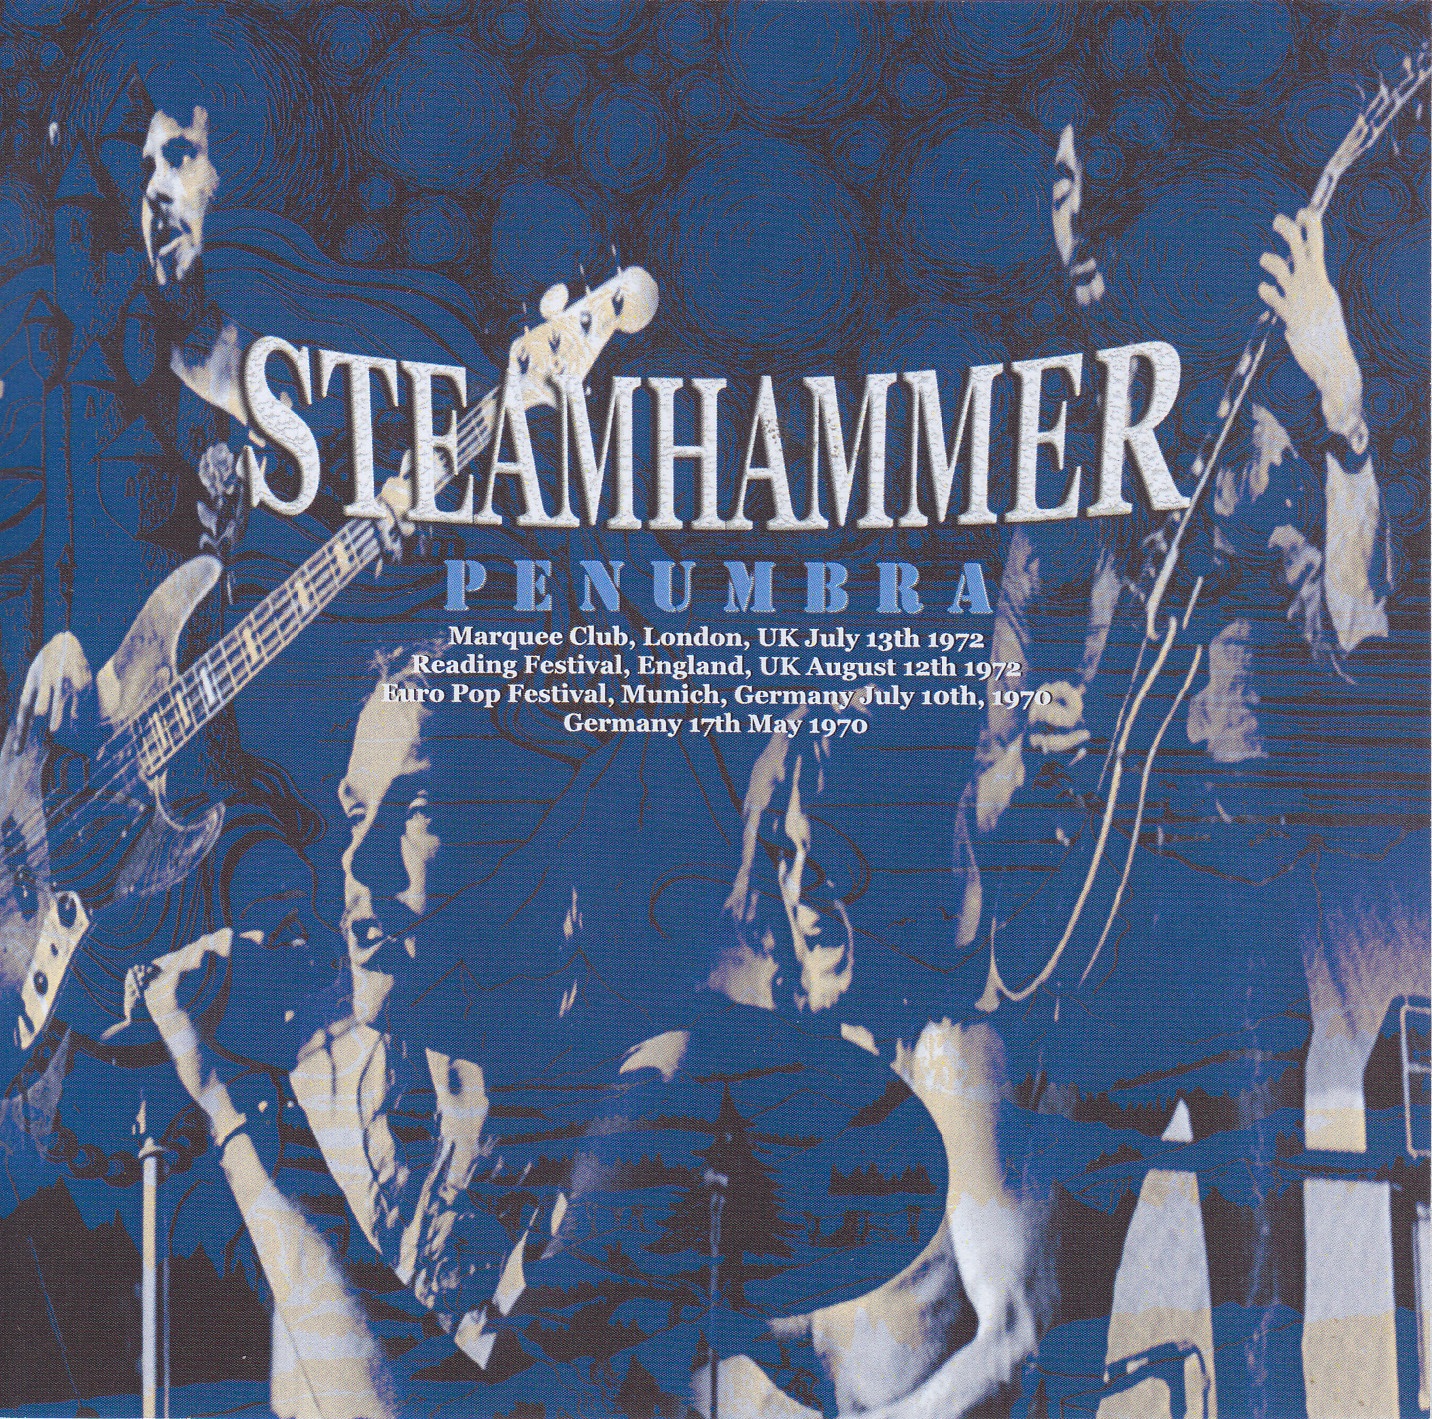 Steamhammer1970and1972Penumbra2CDbootCollection (2).jpg